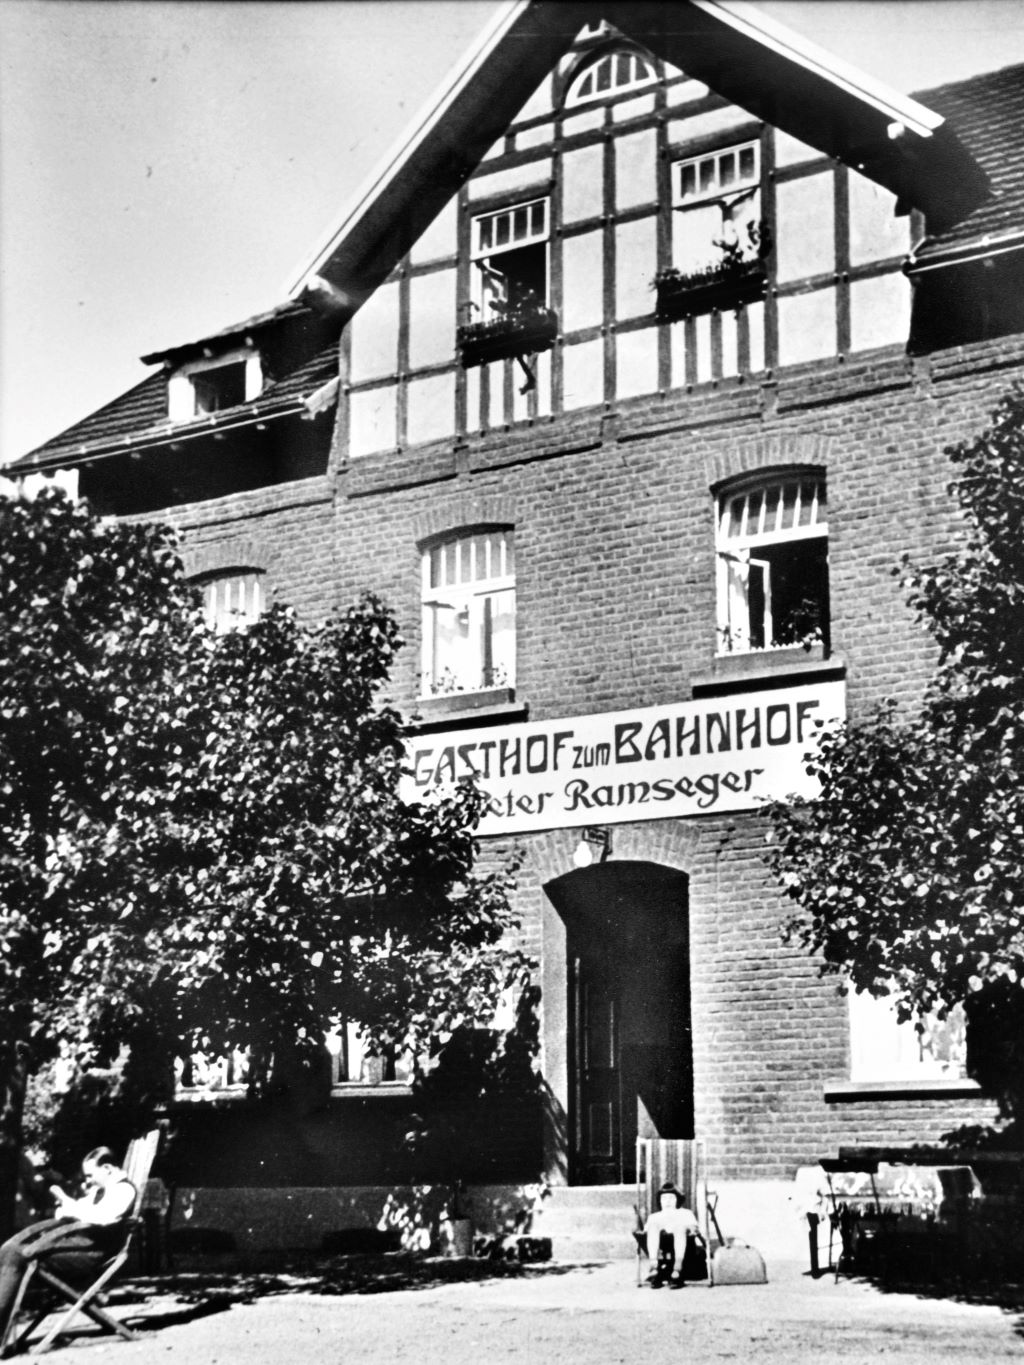 1950 | Gasthof zum Bahnhof Peter Ramseger | Archiv: Rotes Haus, Repro: Burkhard Schäck